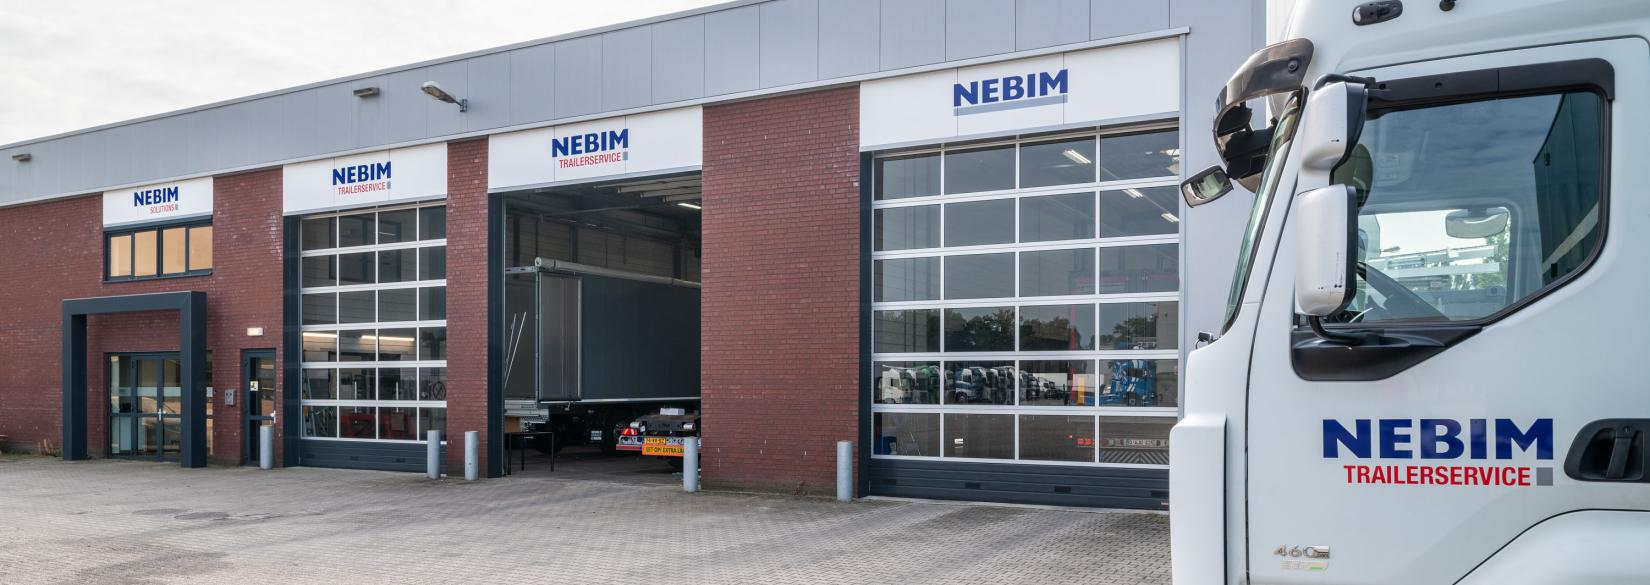 Nebim-trailerservice-001